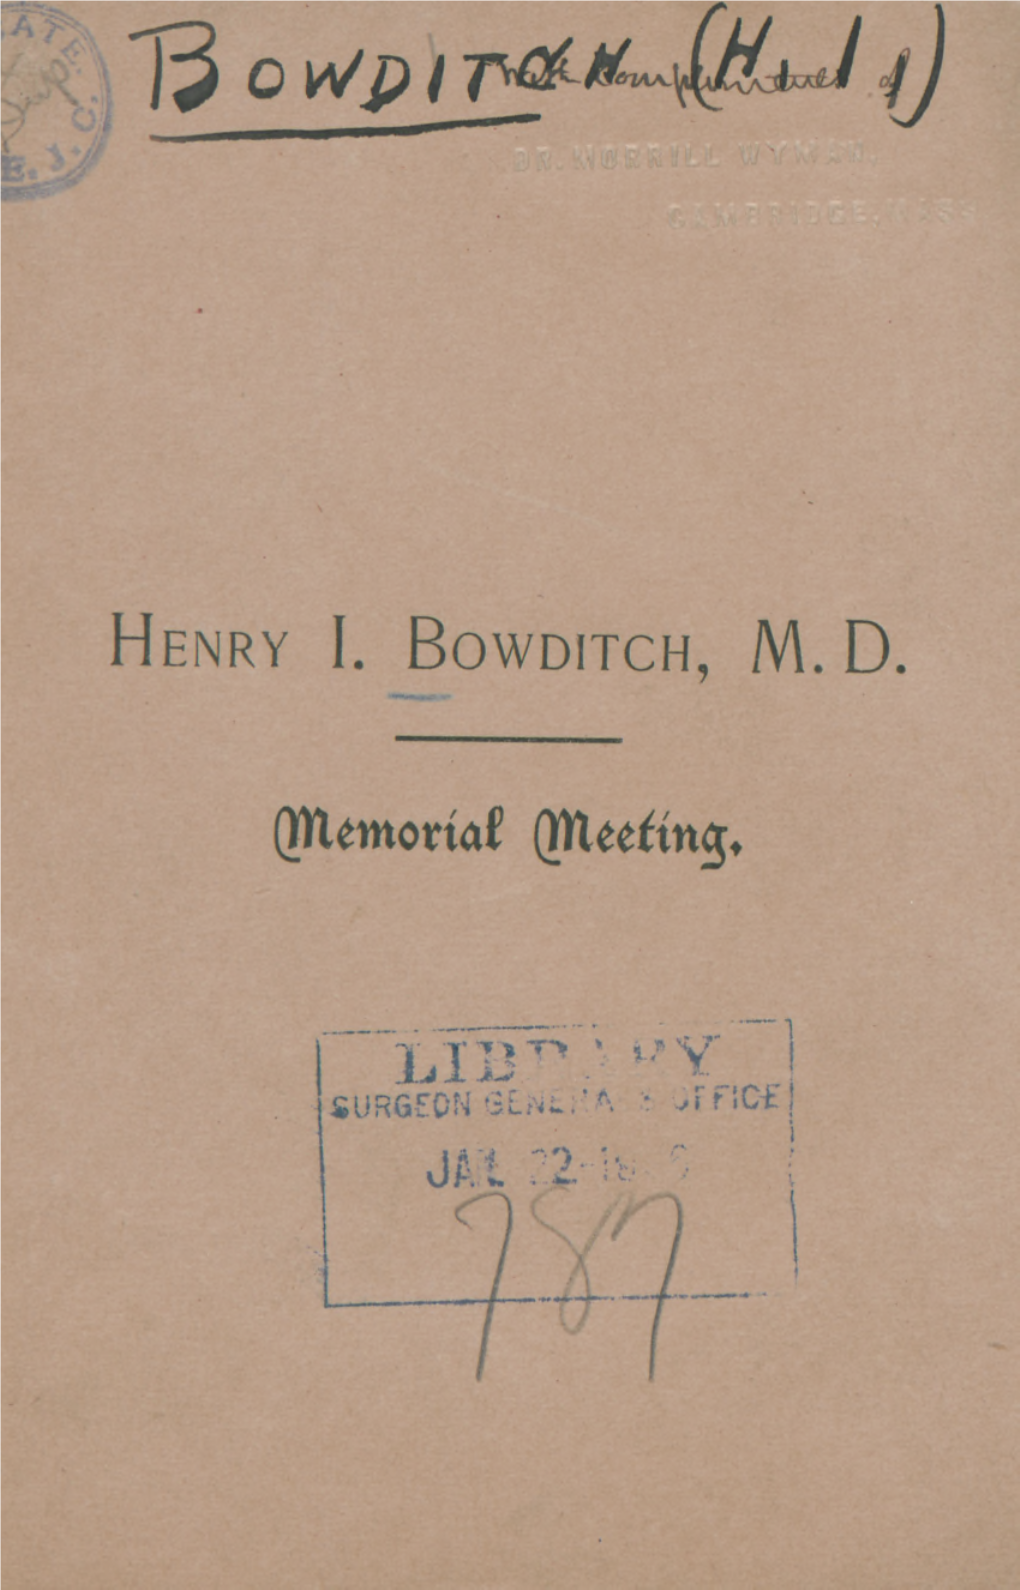 Henry I. Bowditch, M.D.